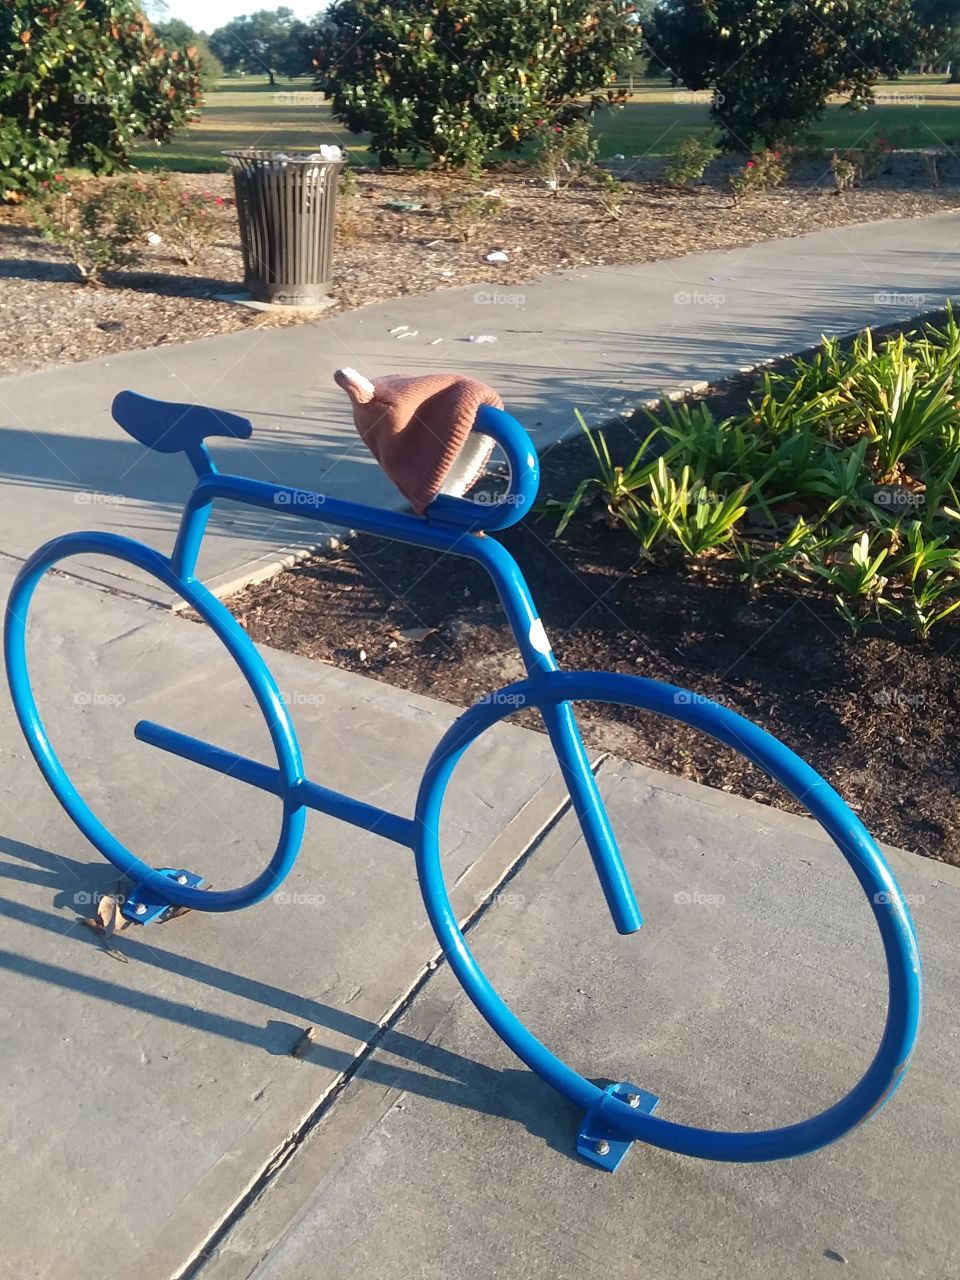 A blue bike rake, with a peach colored hat.